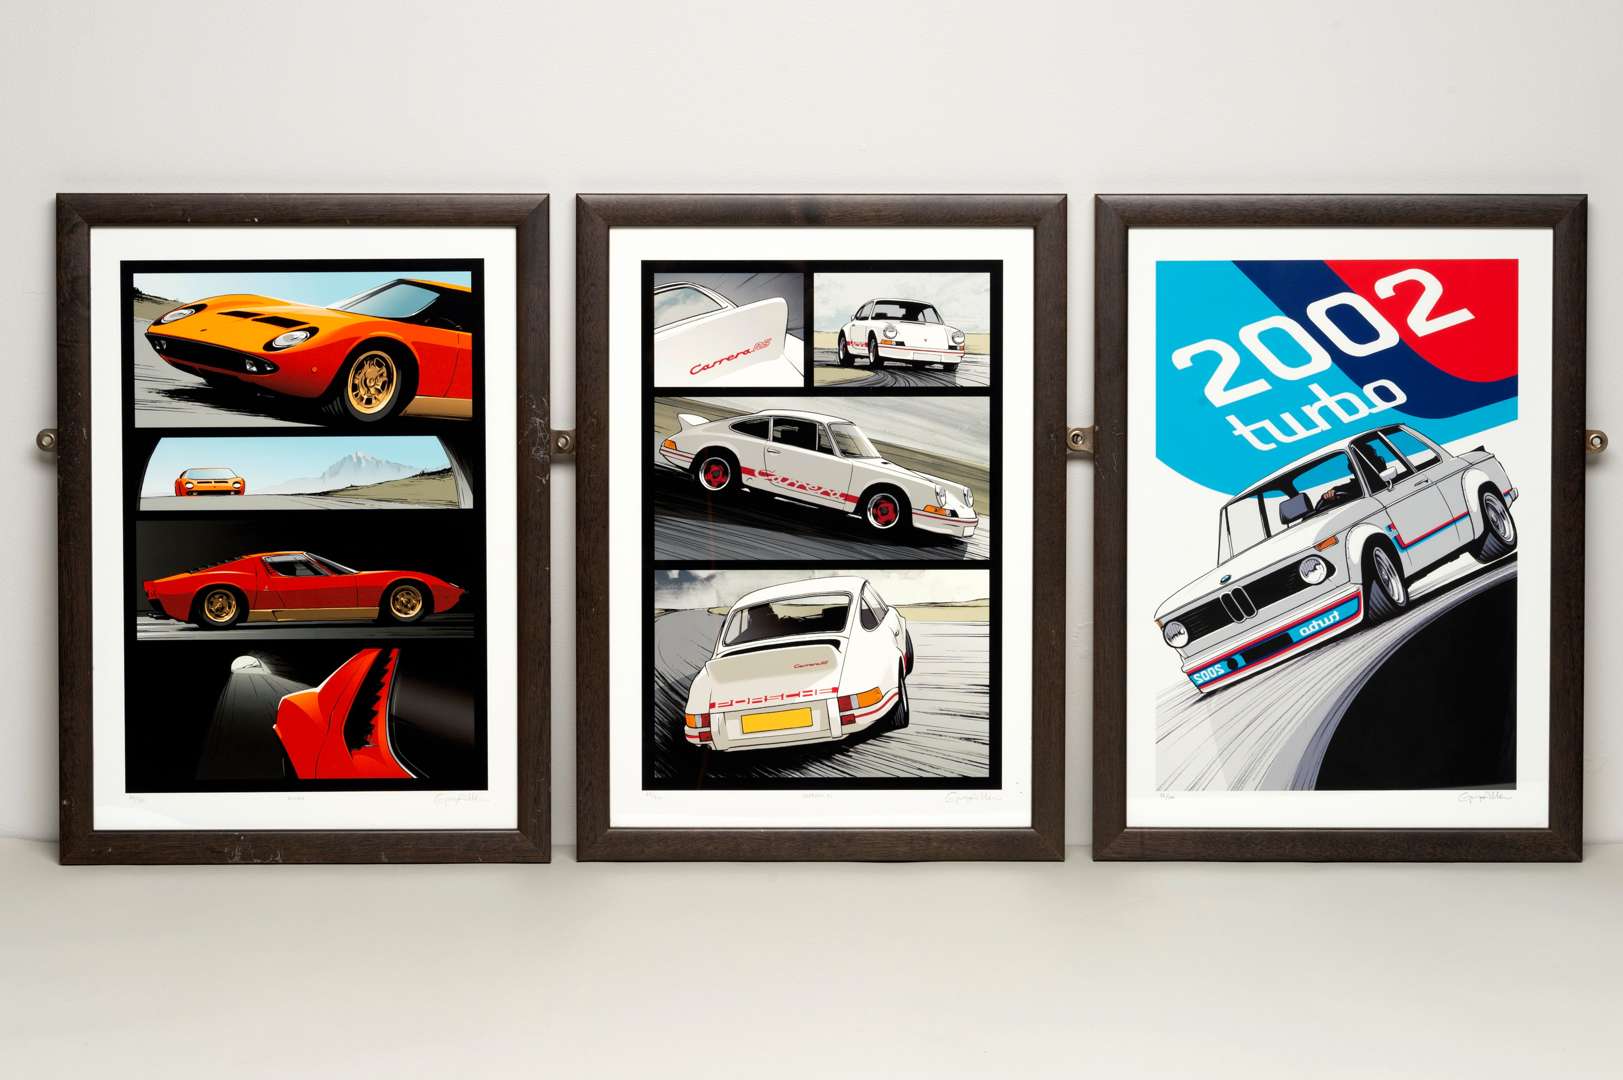 <p>GUY ALLEN, 3 x limited edition prints, “Muira”, “Carrera RS", “BMW 2002 Turbo”,</p>